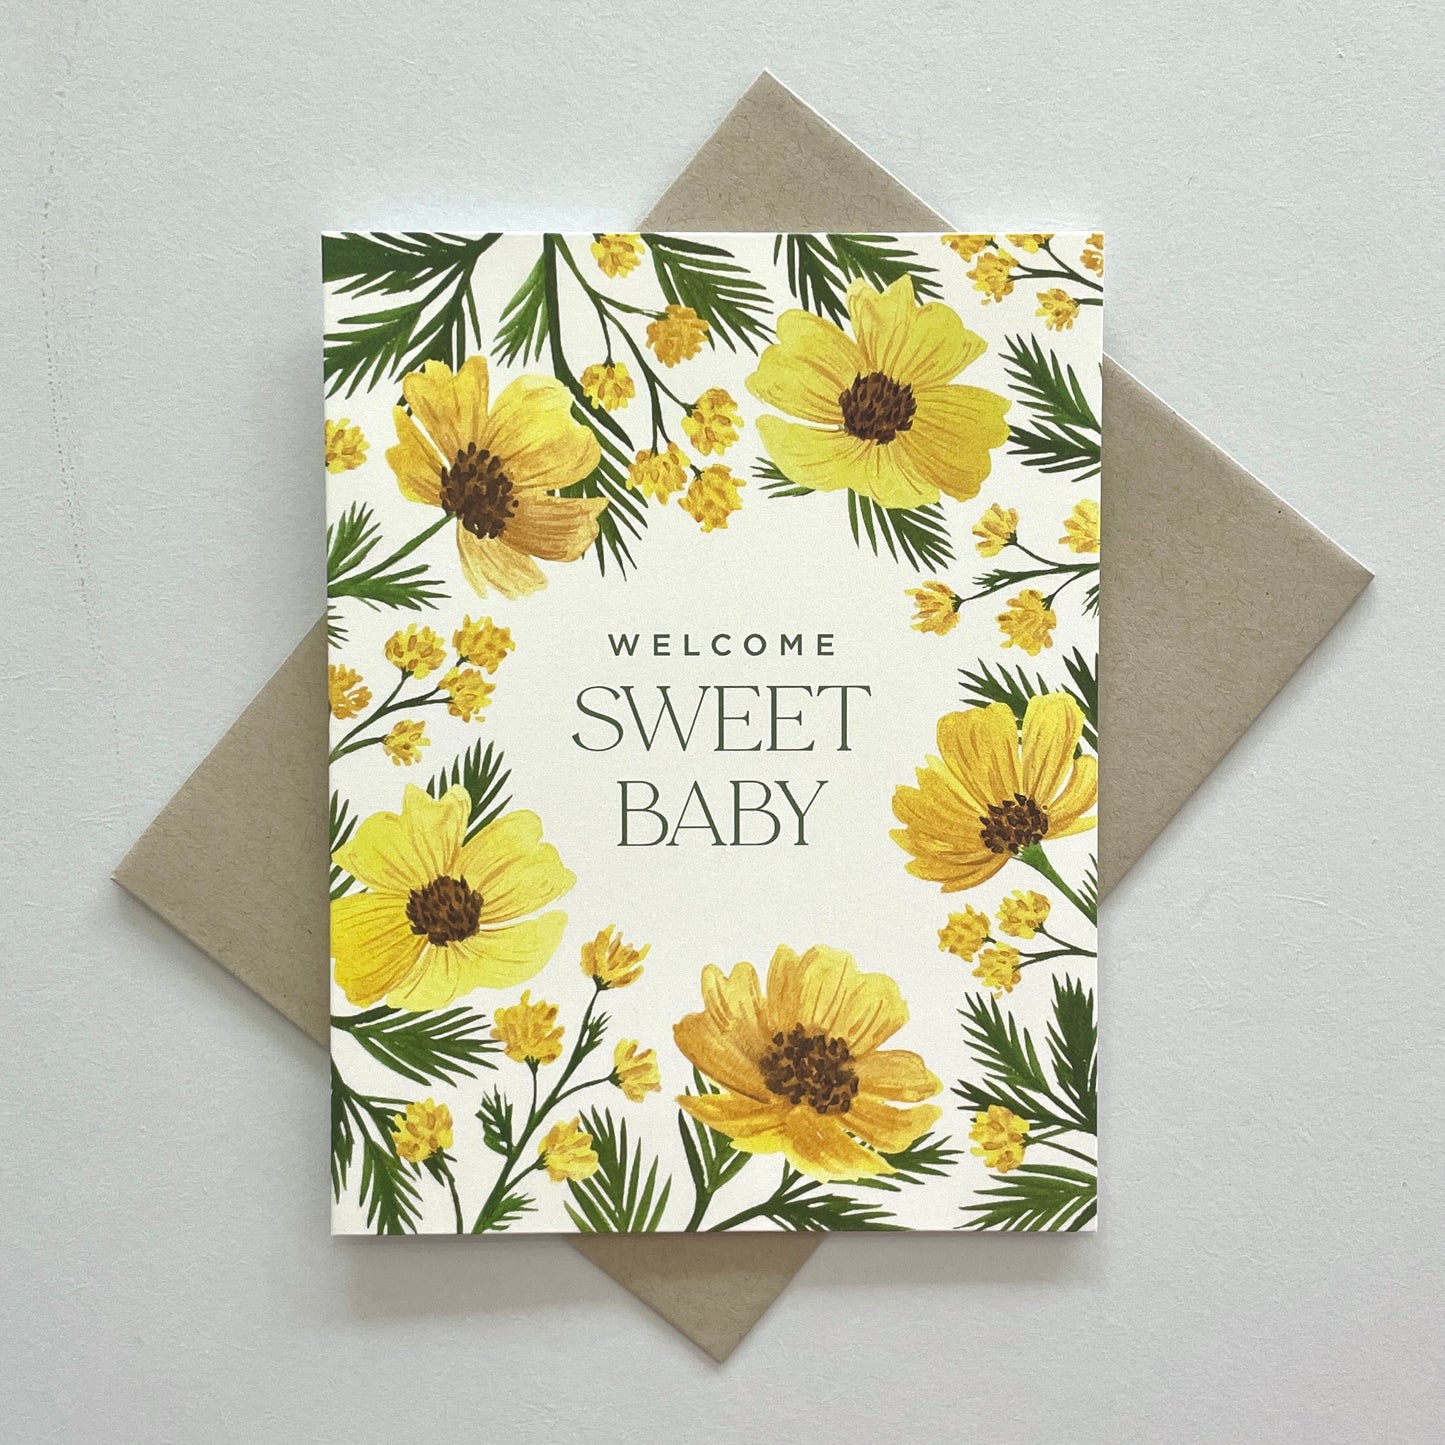 Welcome Sweet Baby Wildflower Greeting Card